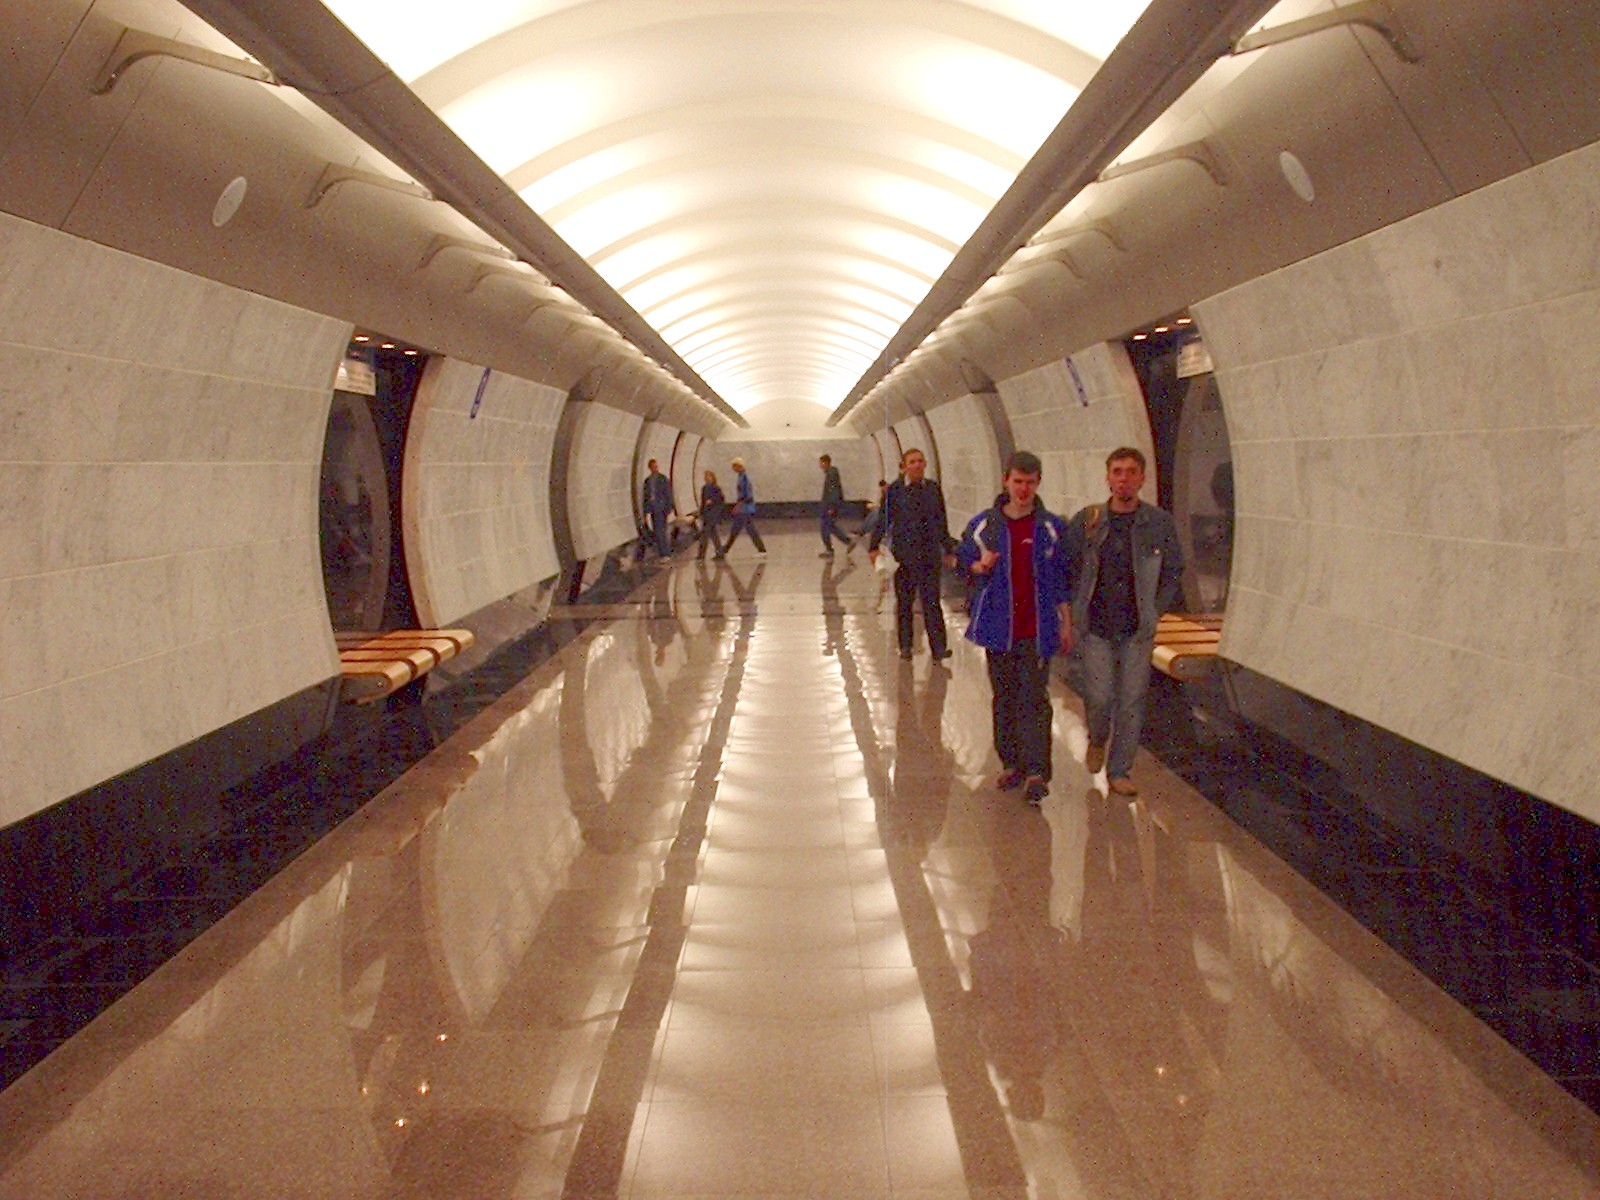 Станция метро международная